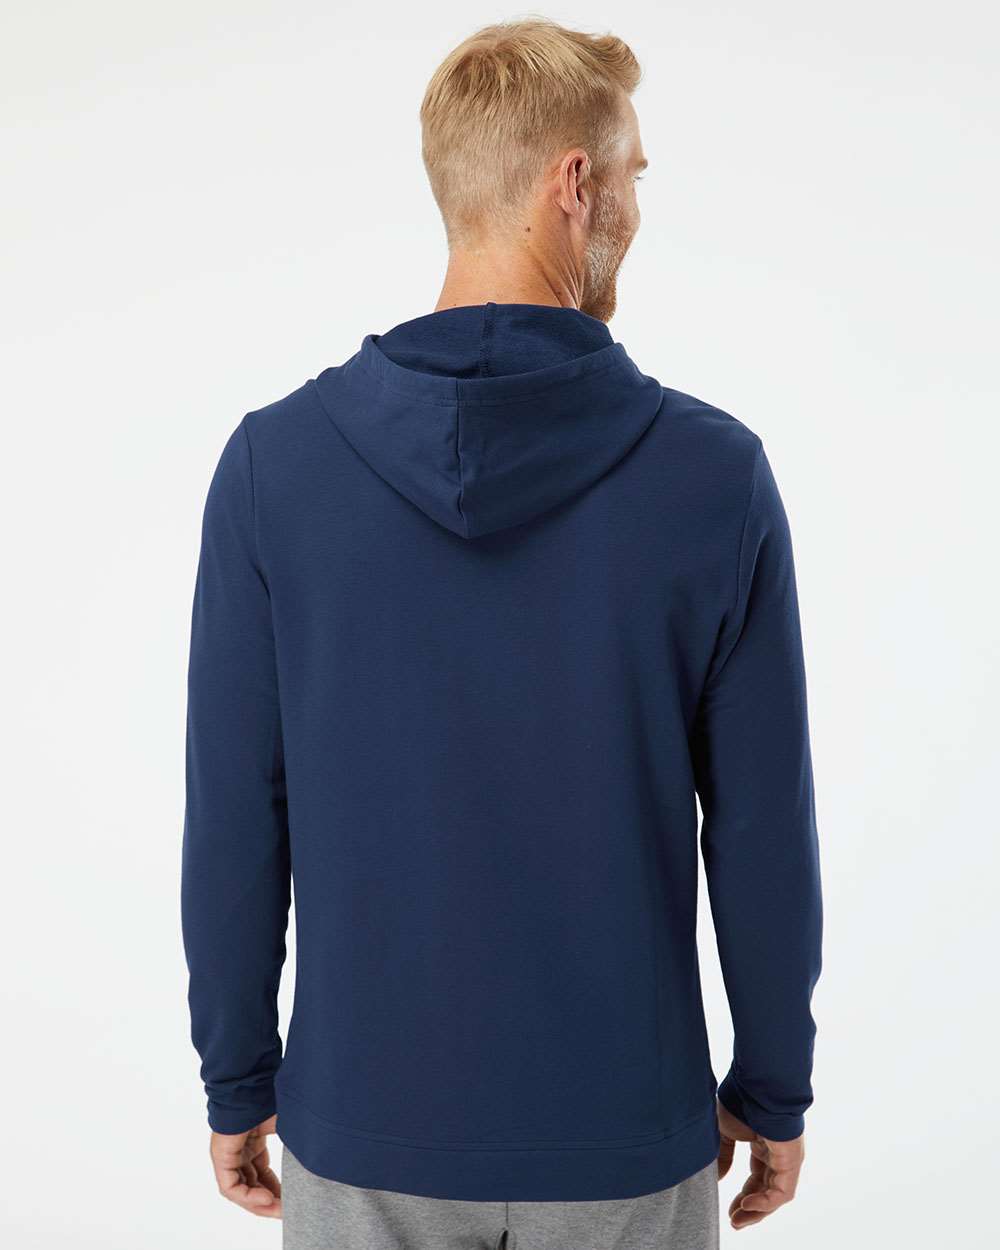 Adidas A450 Lightweight Hooded Sweatshirt #colormdl_Collegiate Navy